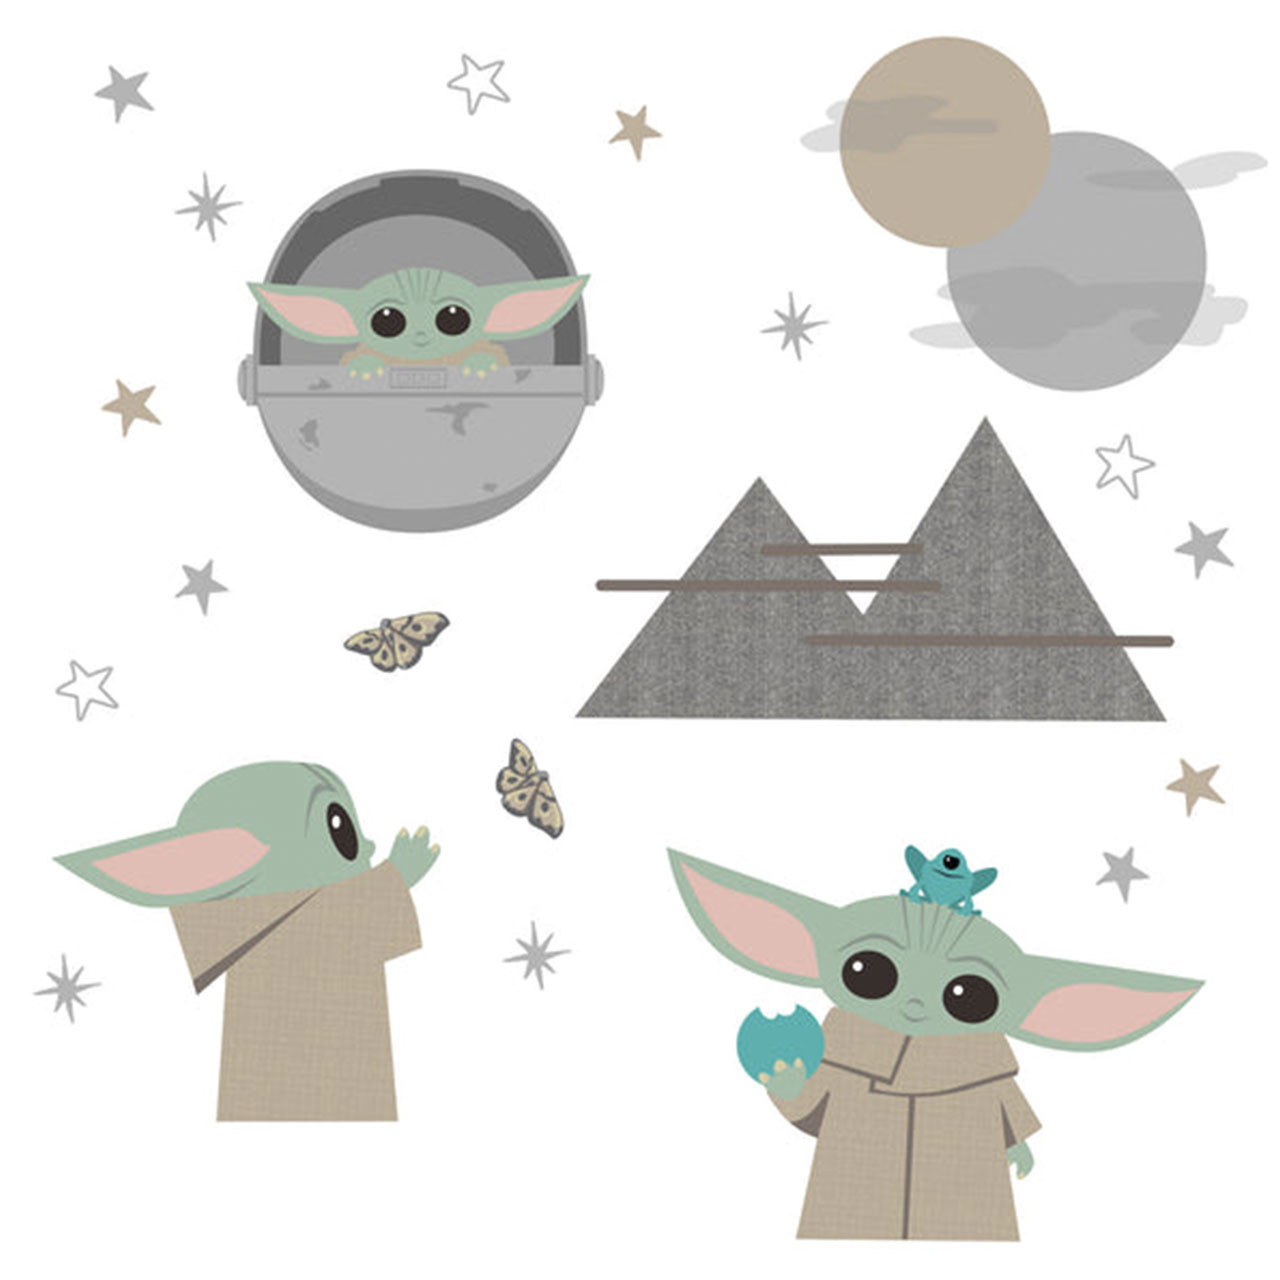 yoda star wars drawings for kids